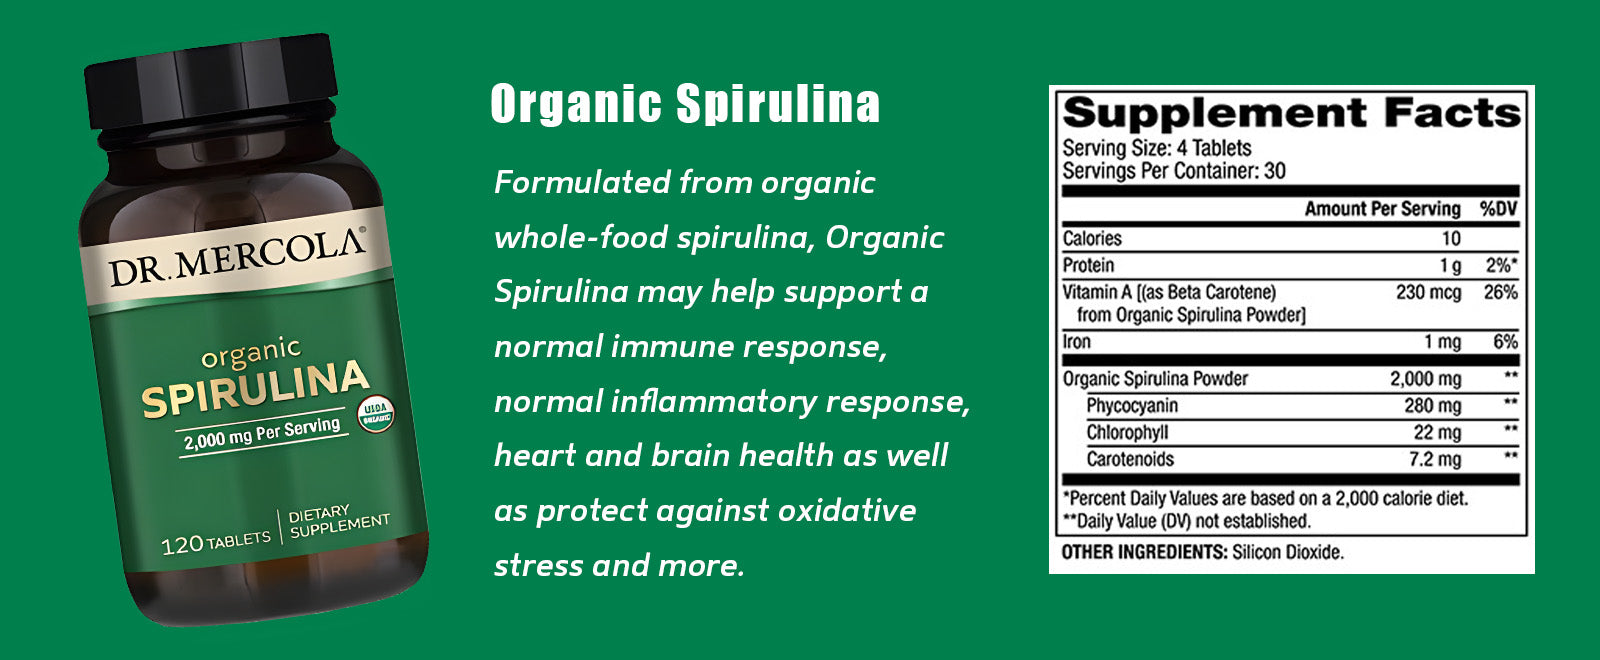 Organic Spirulina - Shop at BiosenseClinic.com - Organic Spirulina: Nature's Nutrient Powerhouse for Whole-Body Health!